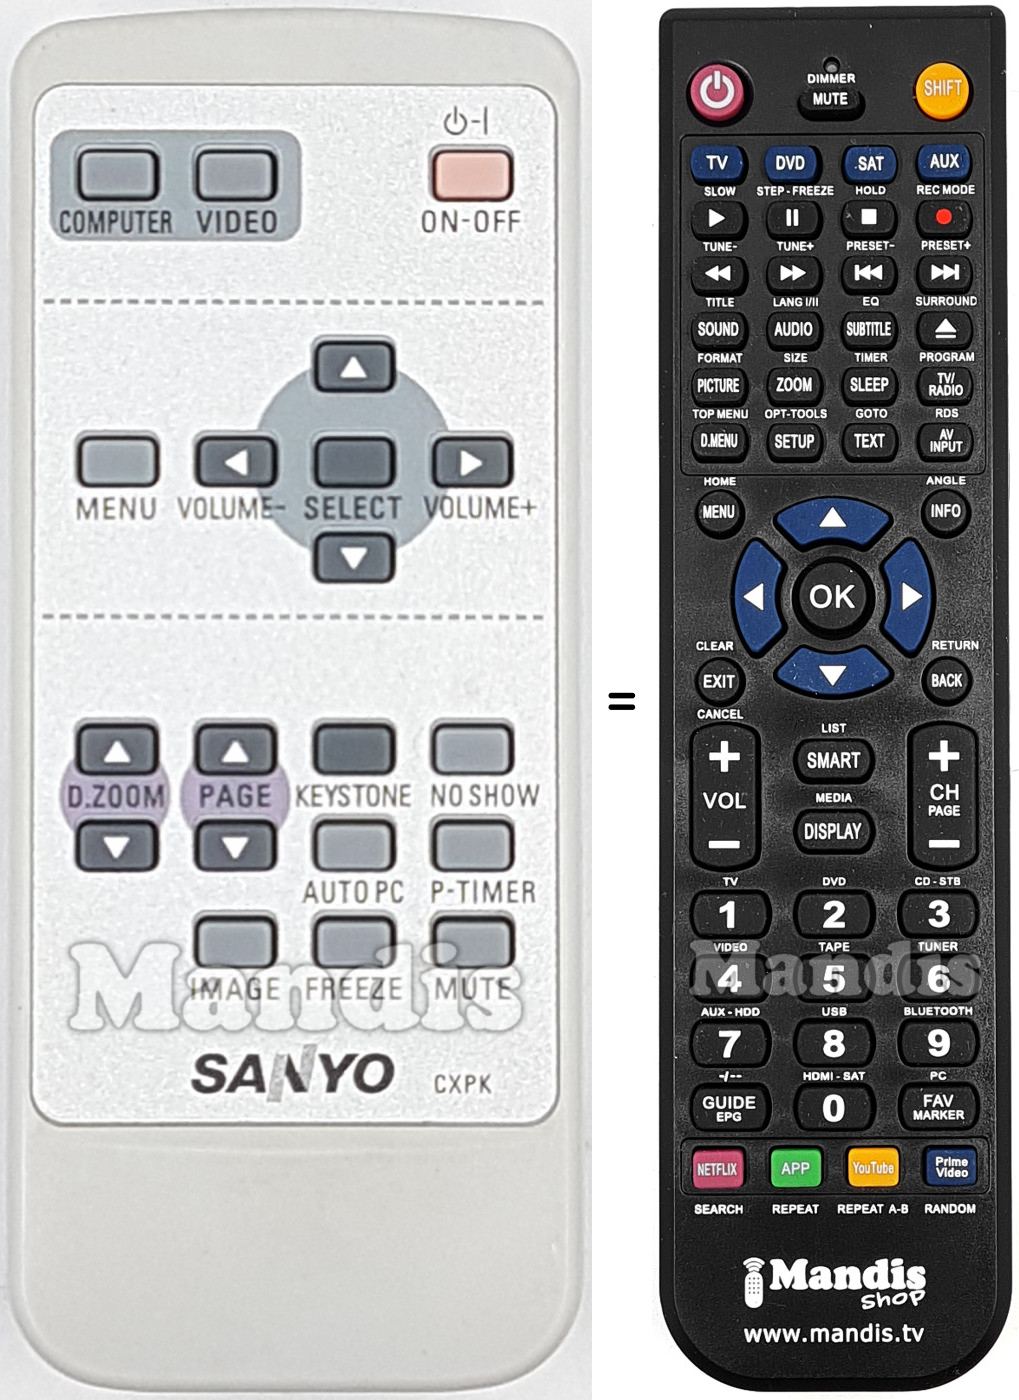 Replacement remote control Sanyo CXPK